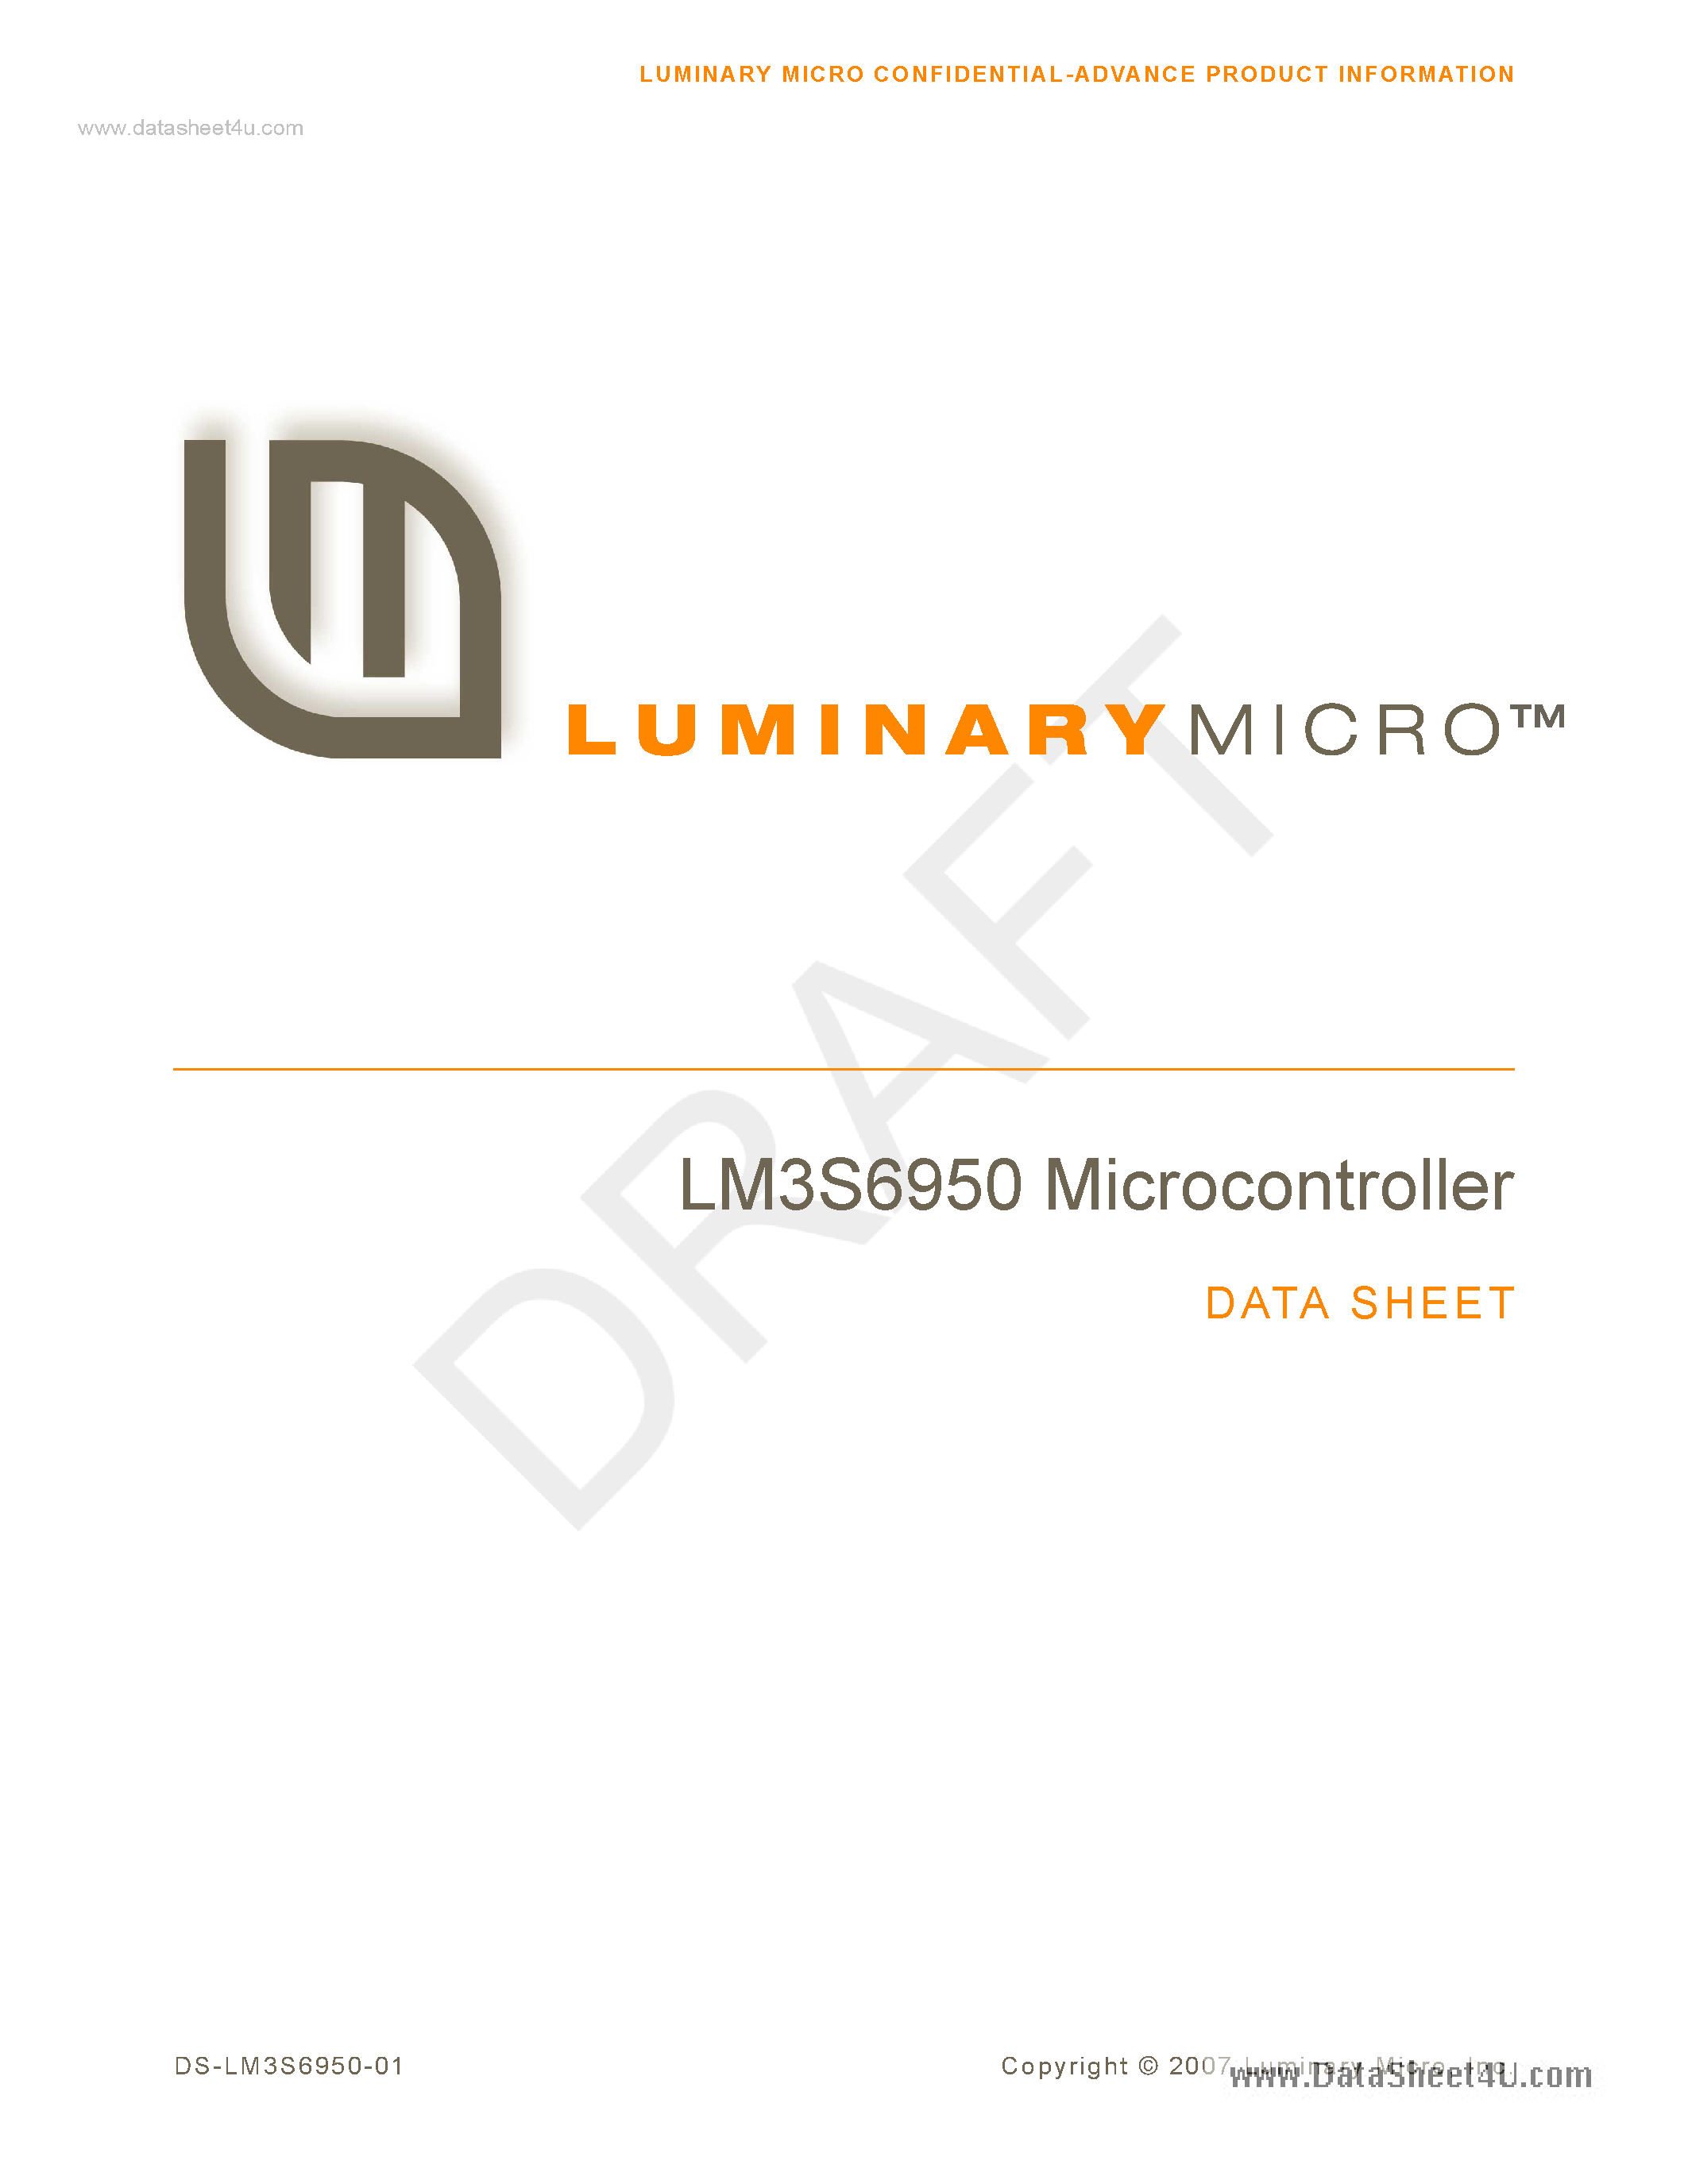 Даташит LM3S6950 - Microcontroller страница 1